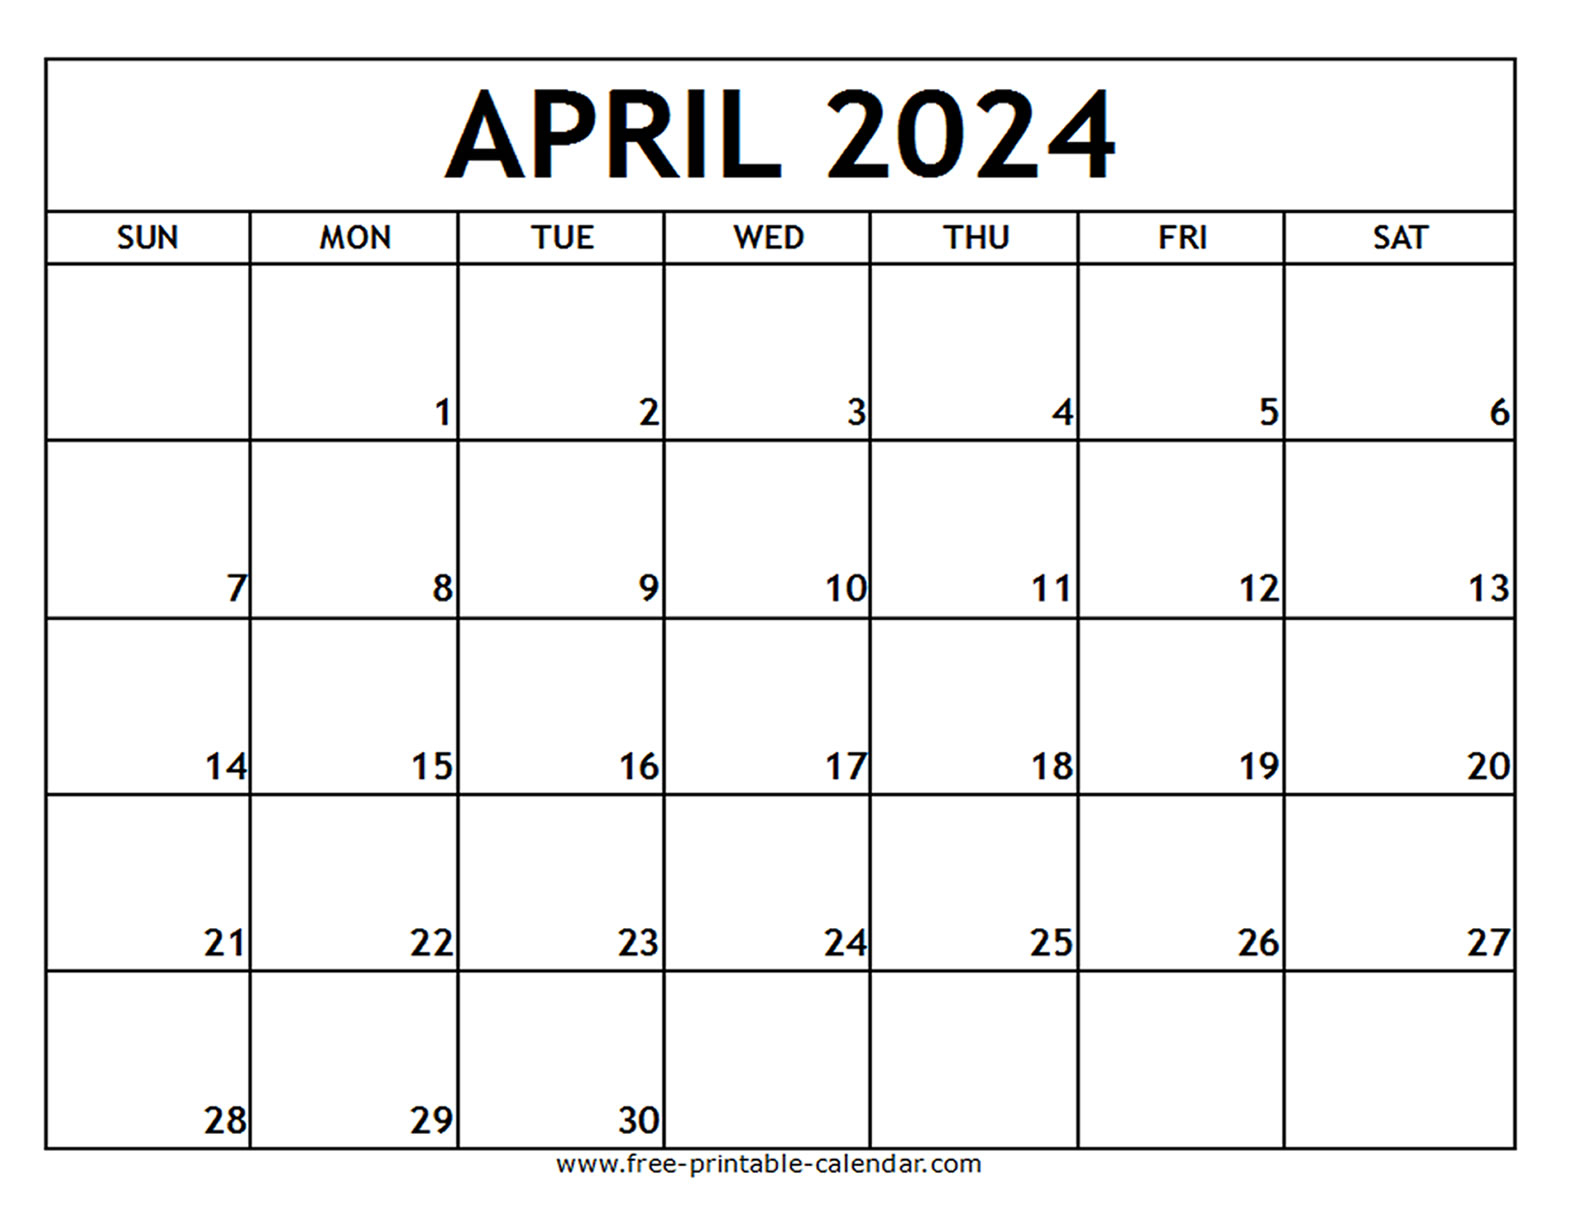 April 2024 Printable Calendar - Free-Printable-Calendar within April 2024 Calendar Blank